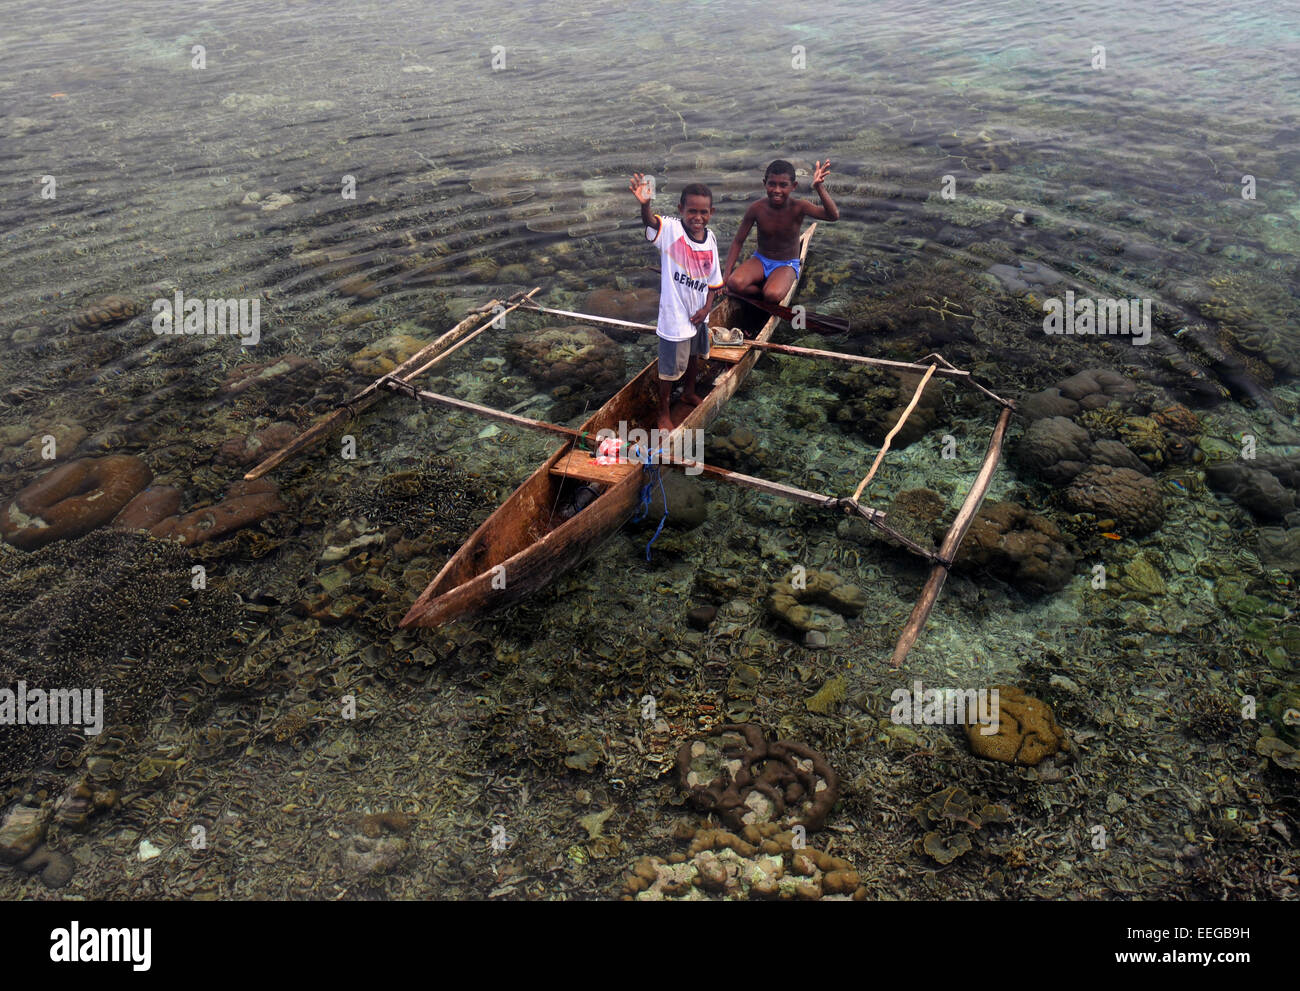 Kids waving from tiny old dugout canoe, Gam Island, Raja Ampat, Papua province, Indonesia. No MR Stock Photo